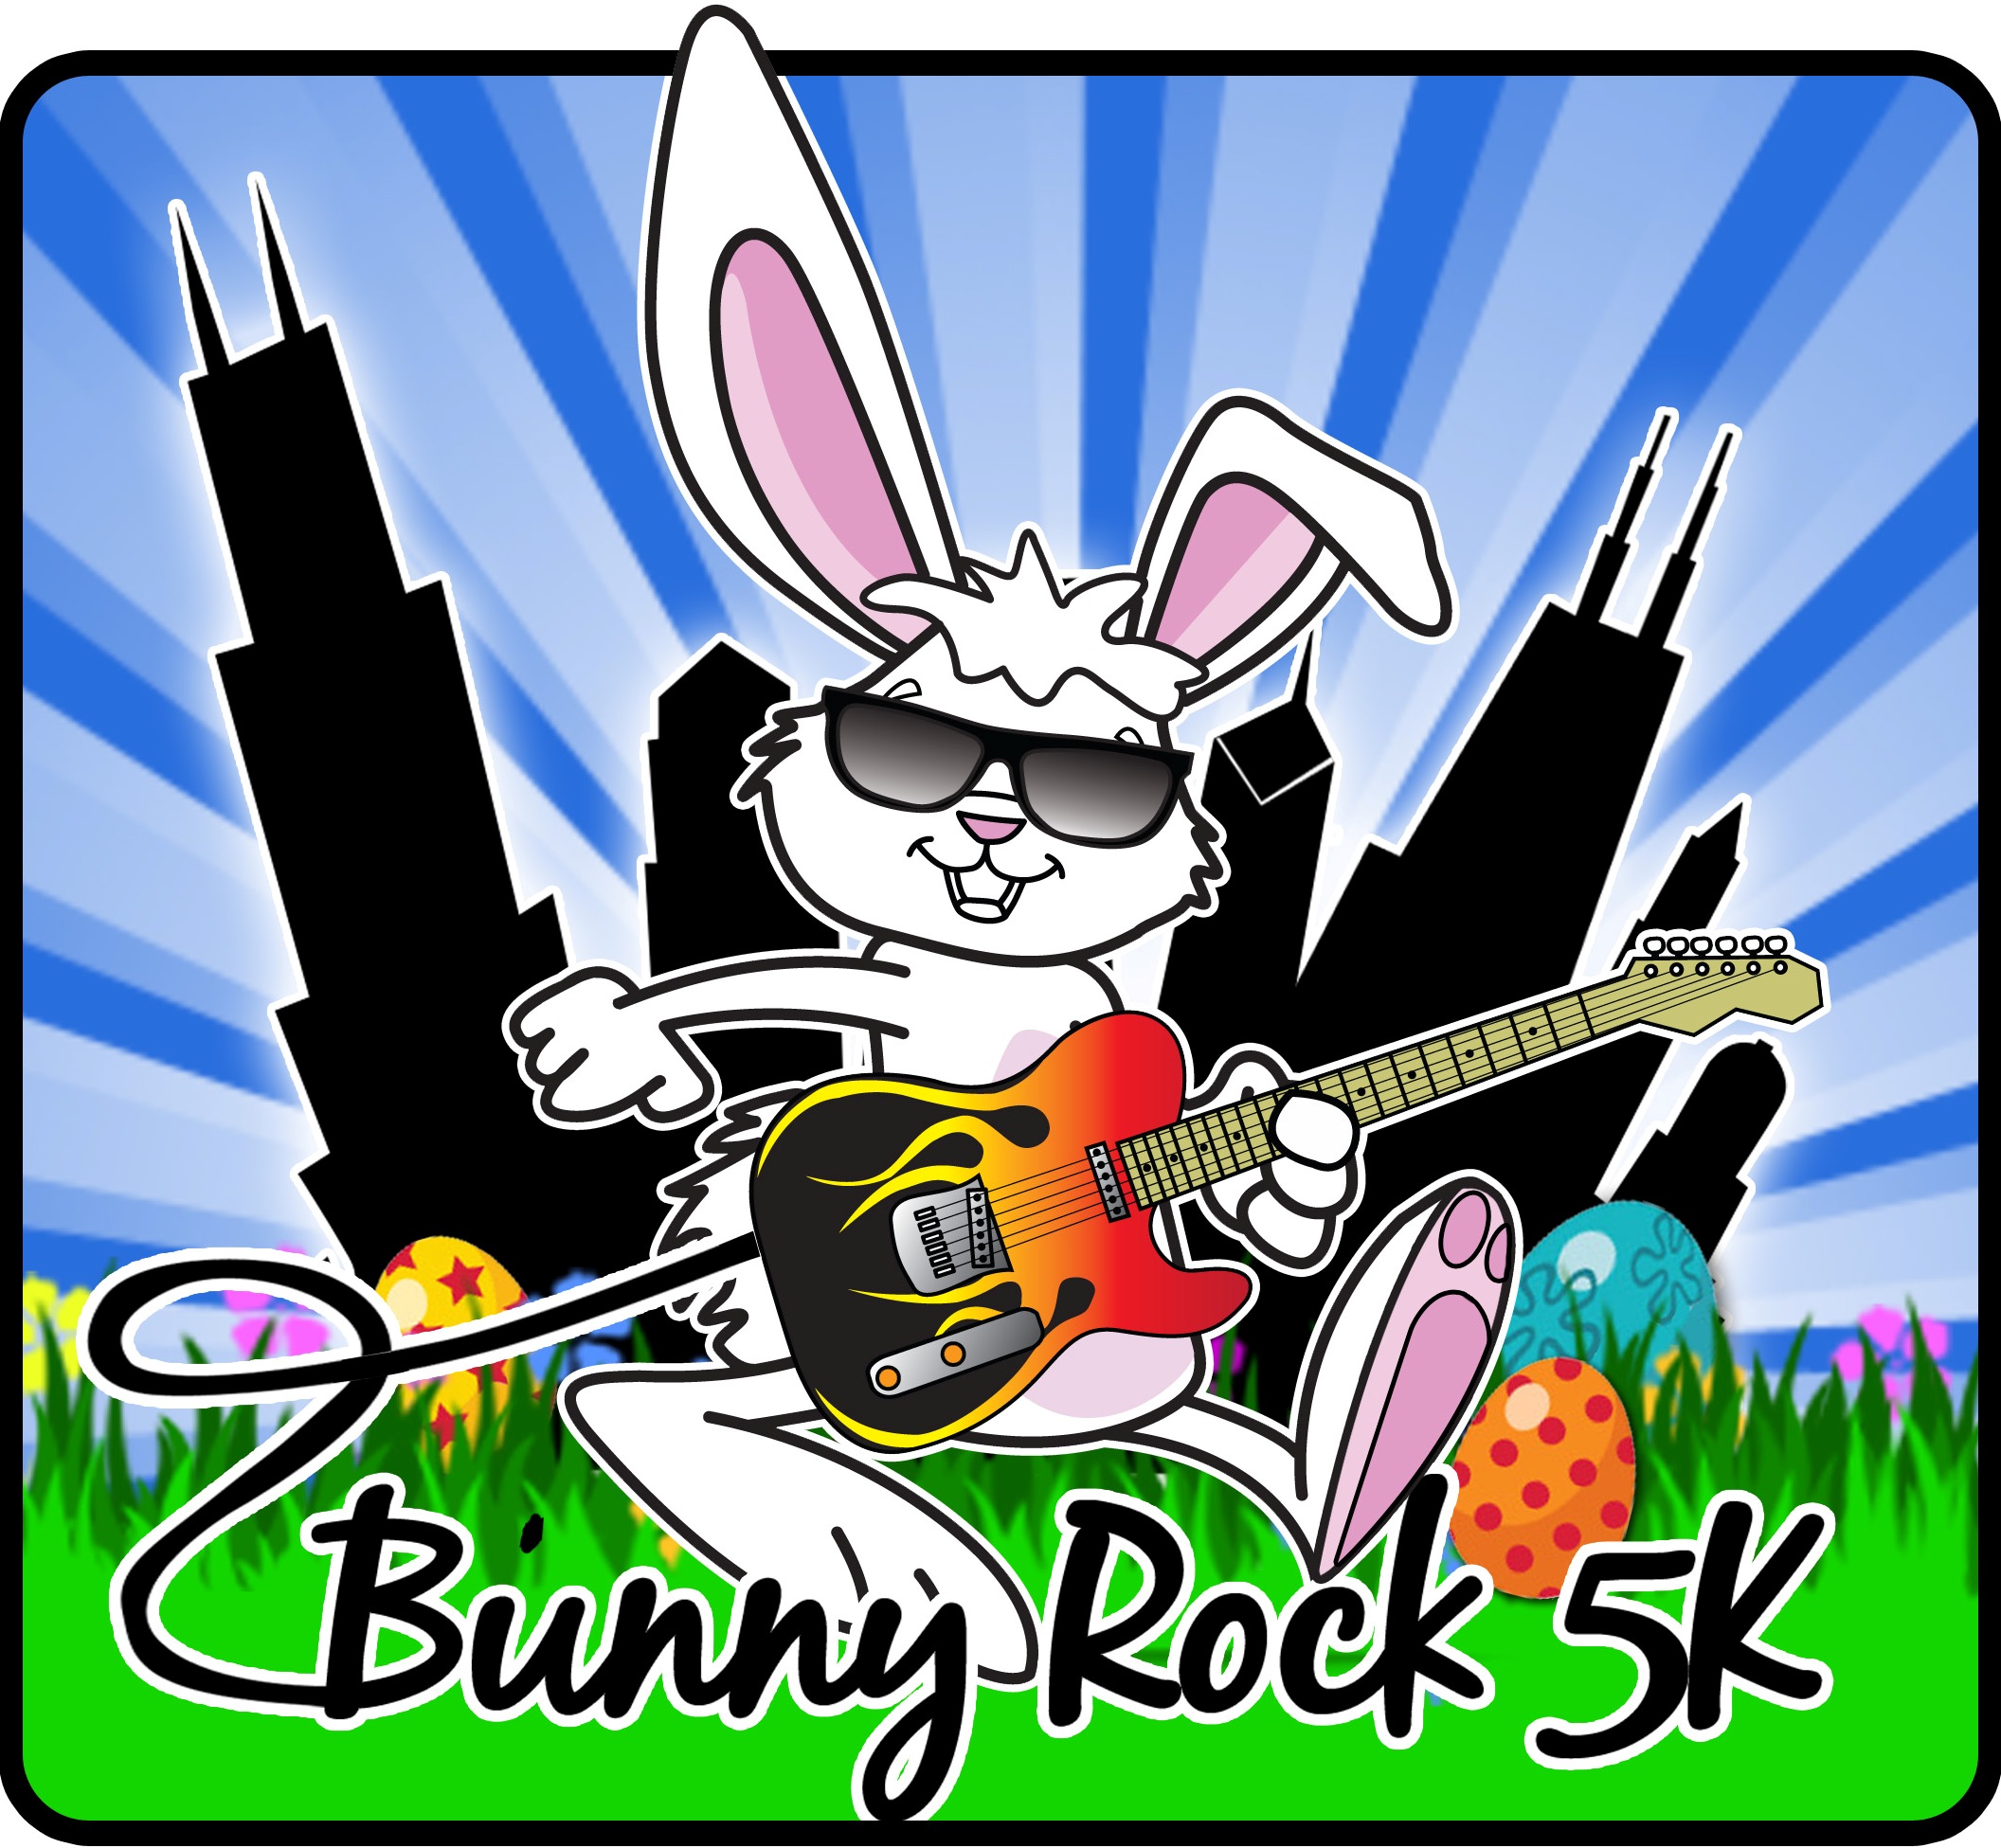 Bunny Rock 5K Chicago